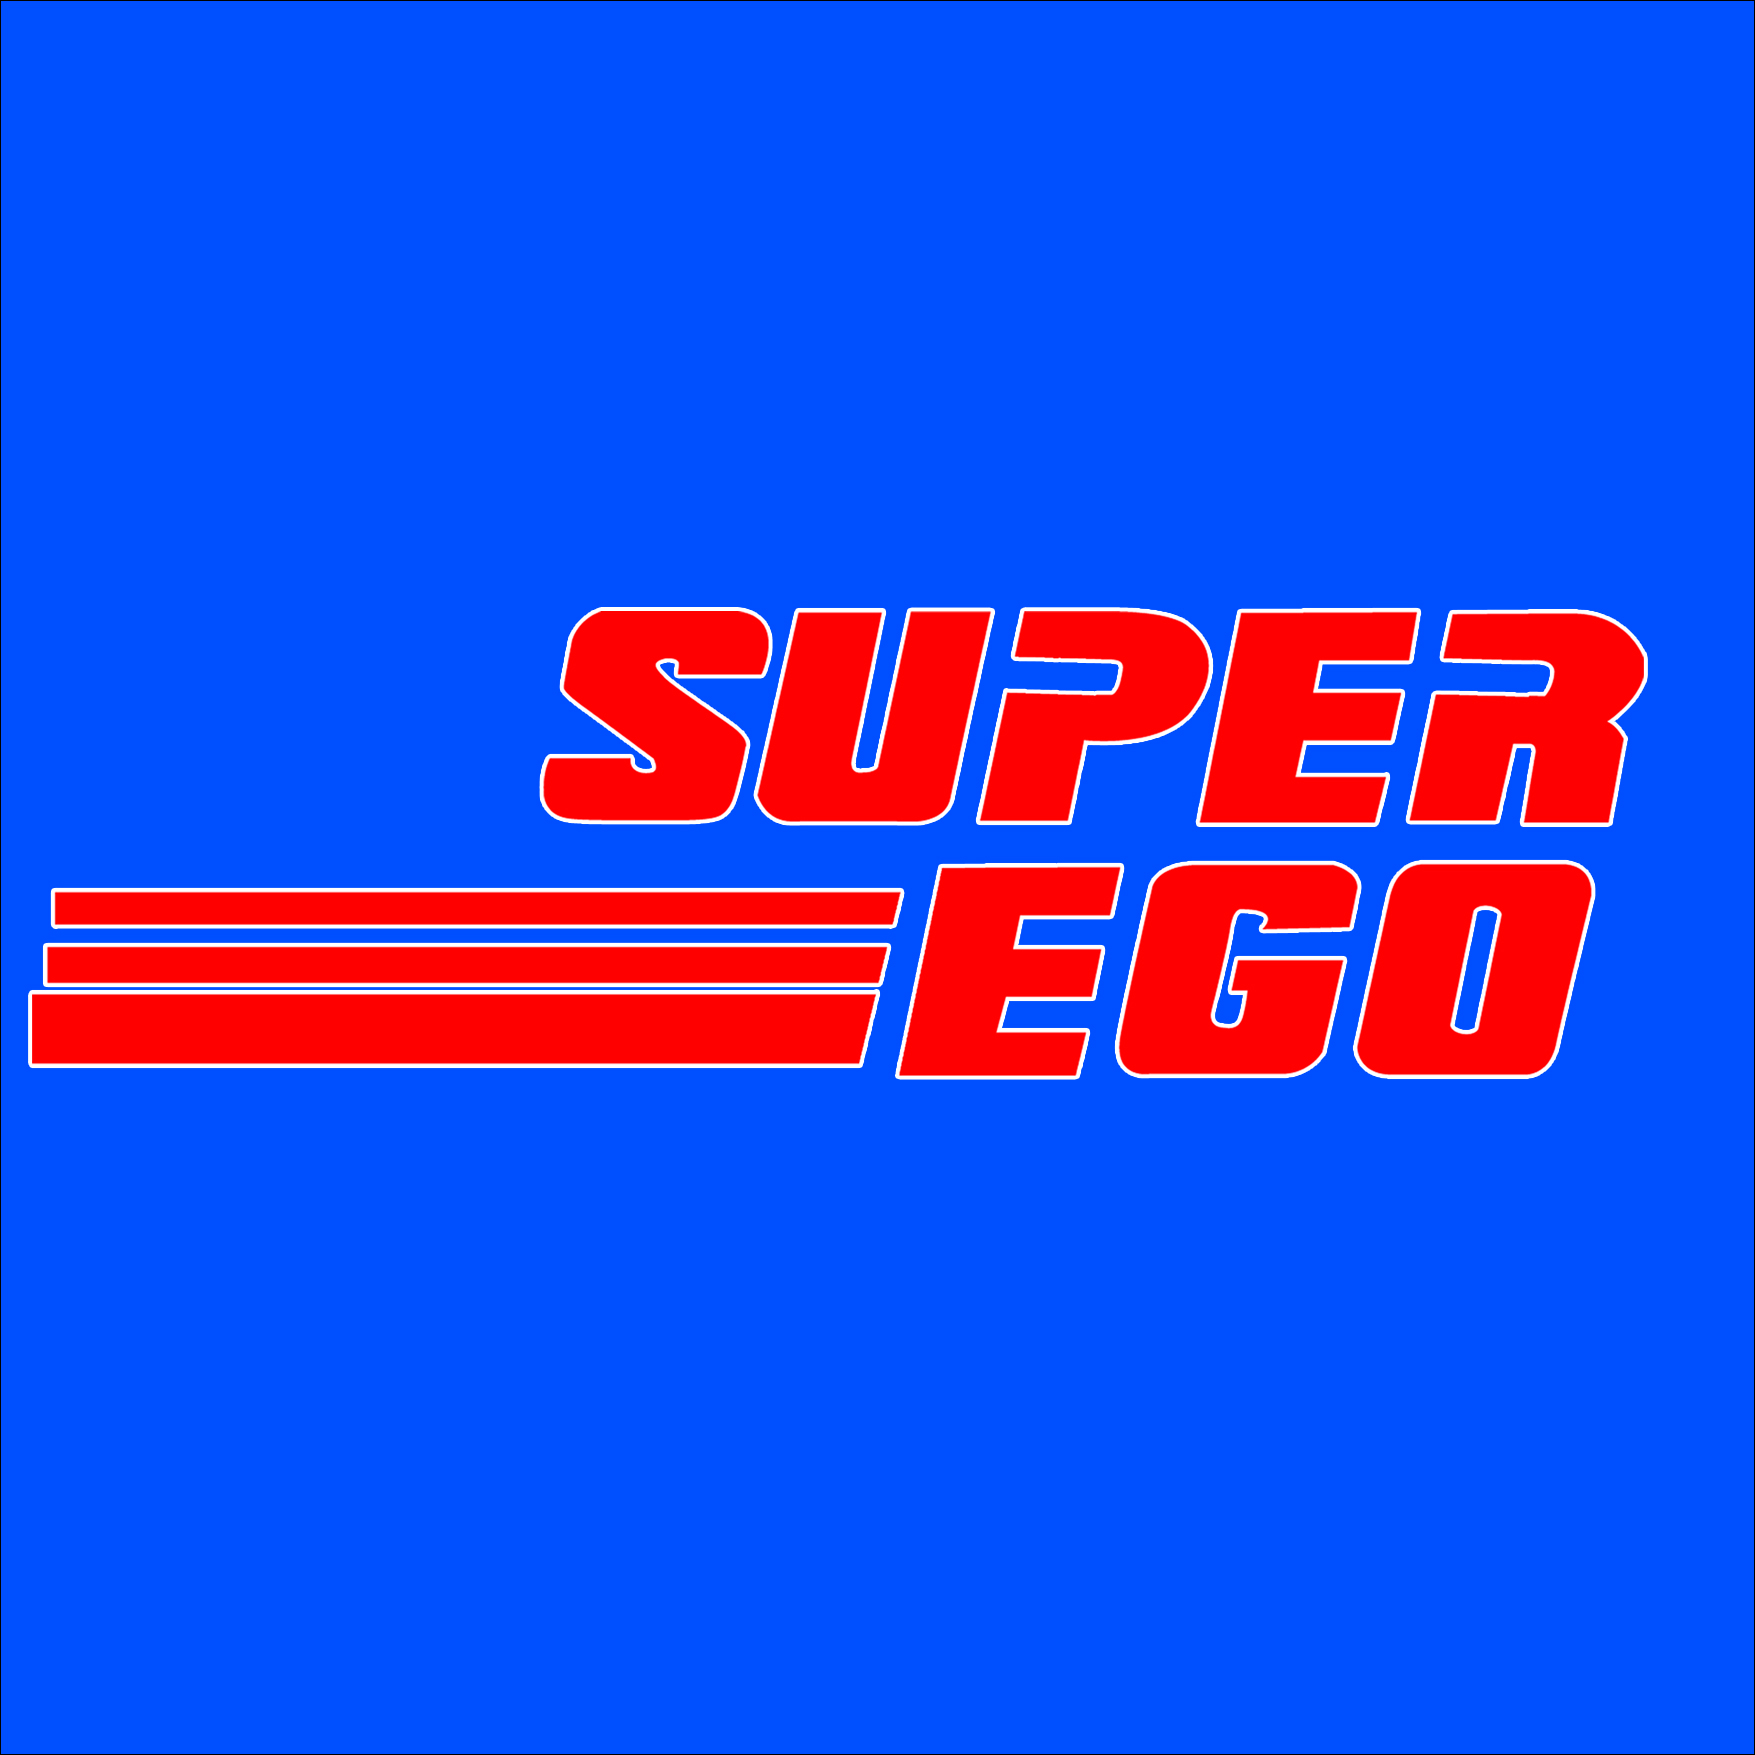 Super Ego